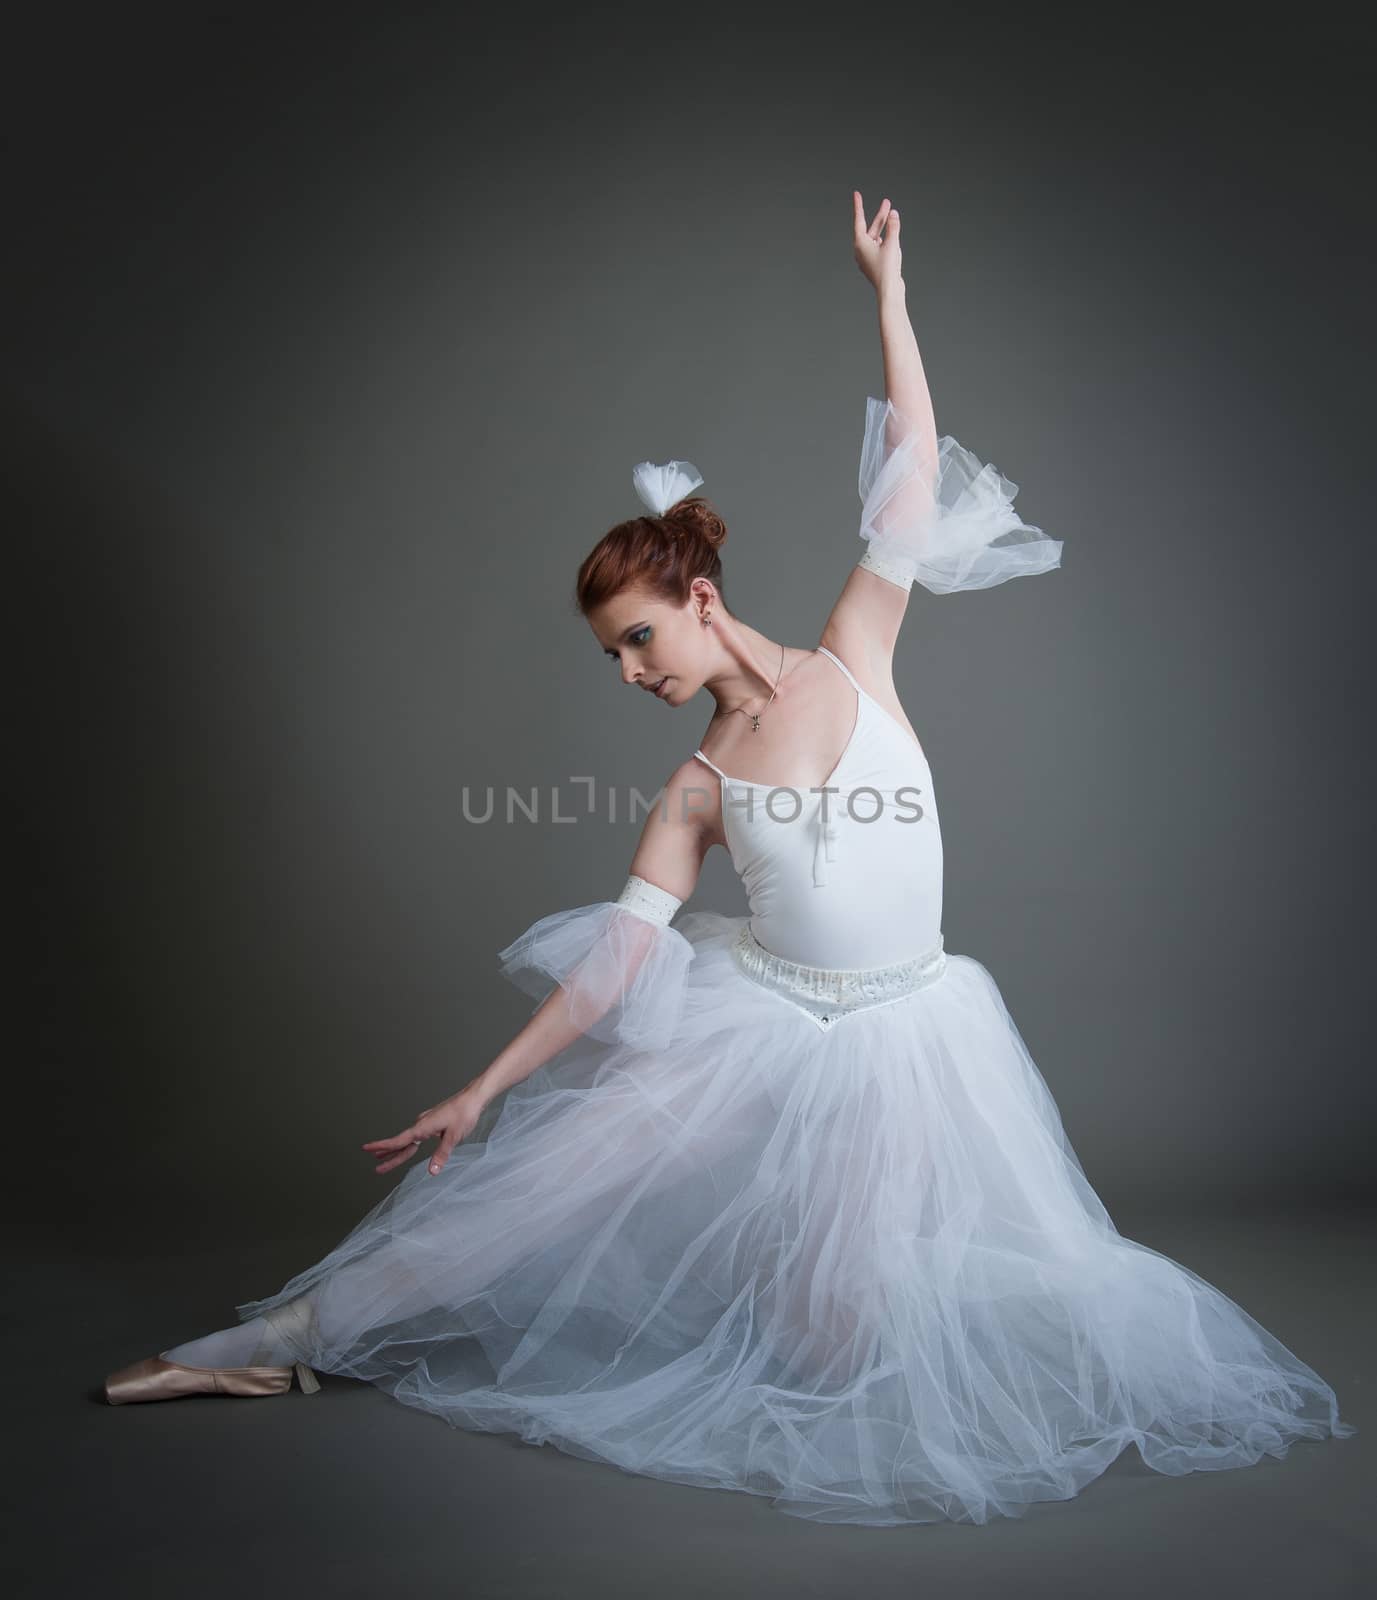 ballerina on a grey background by raduga21